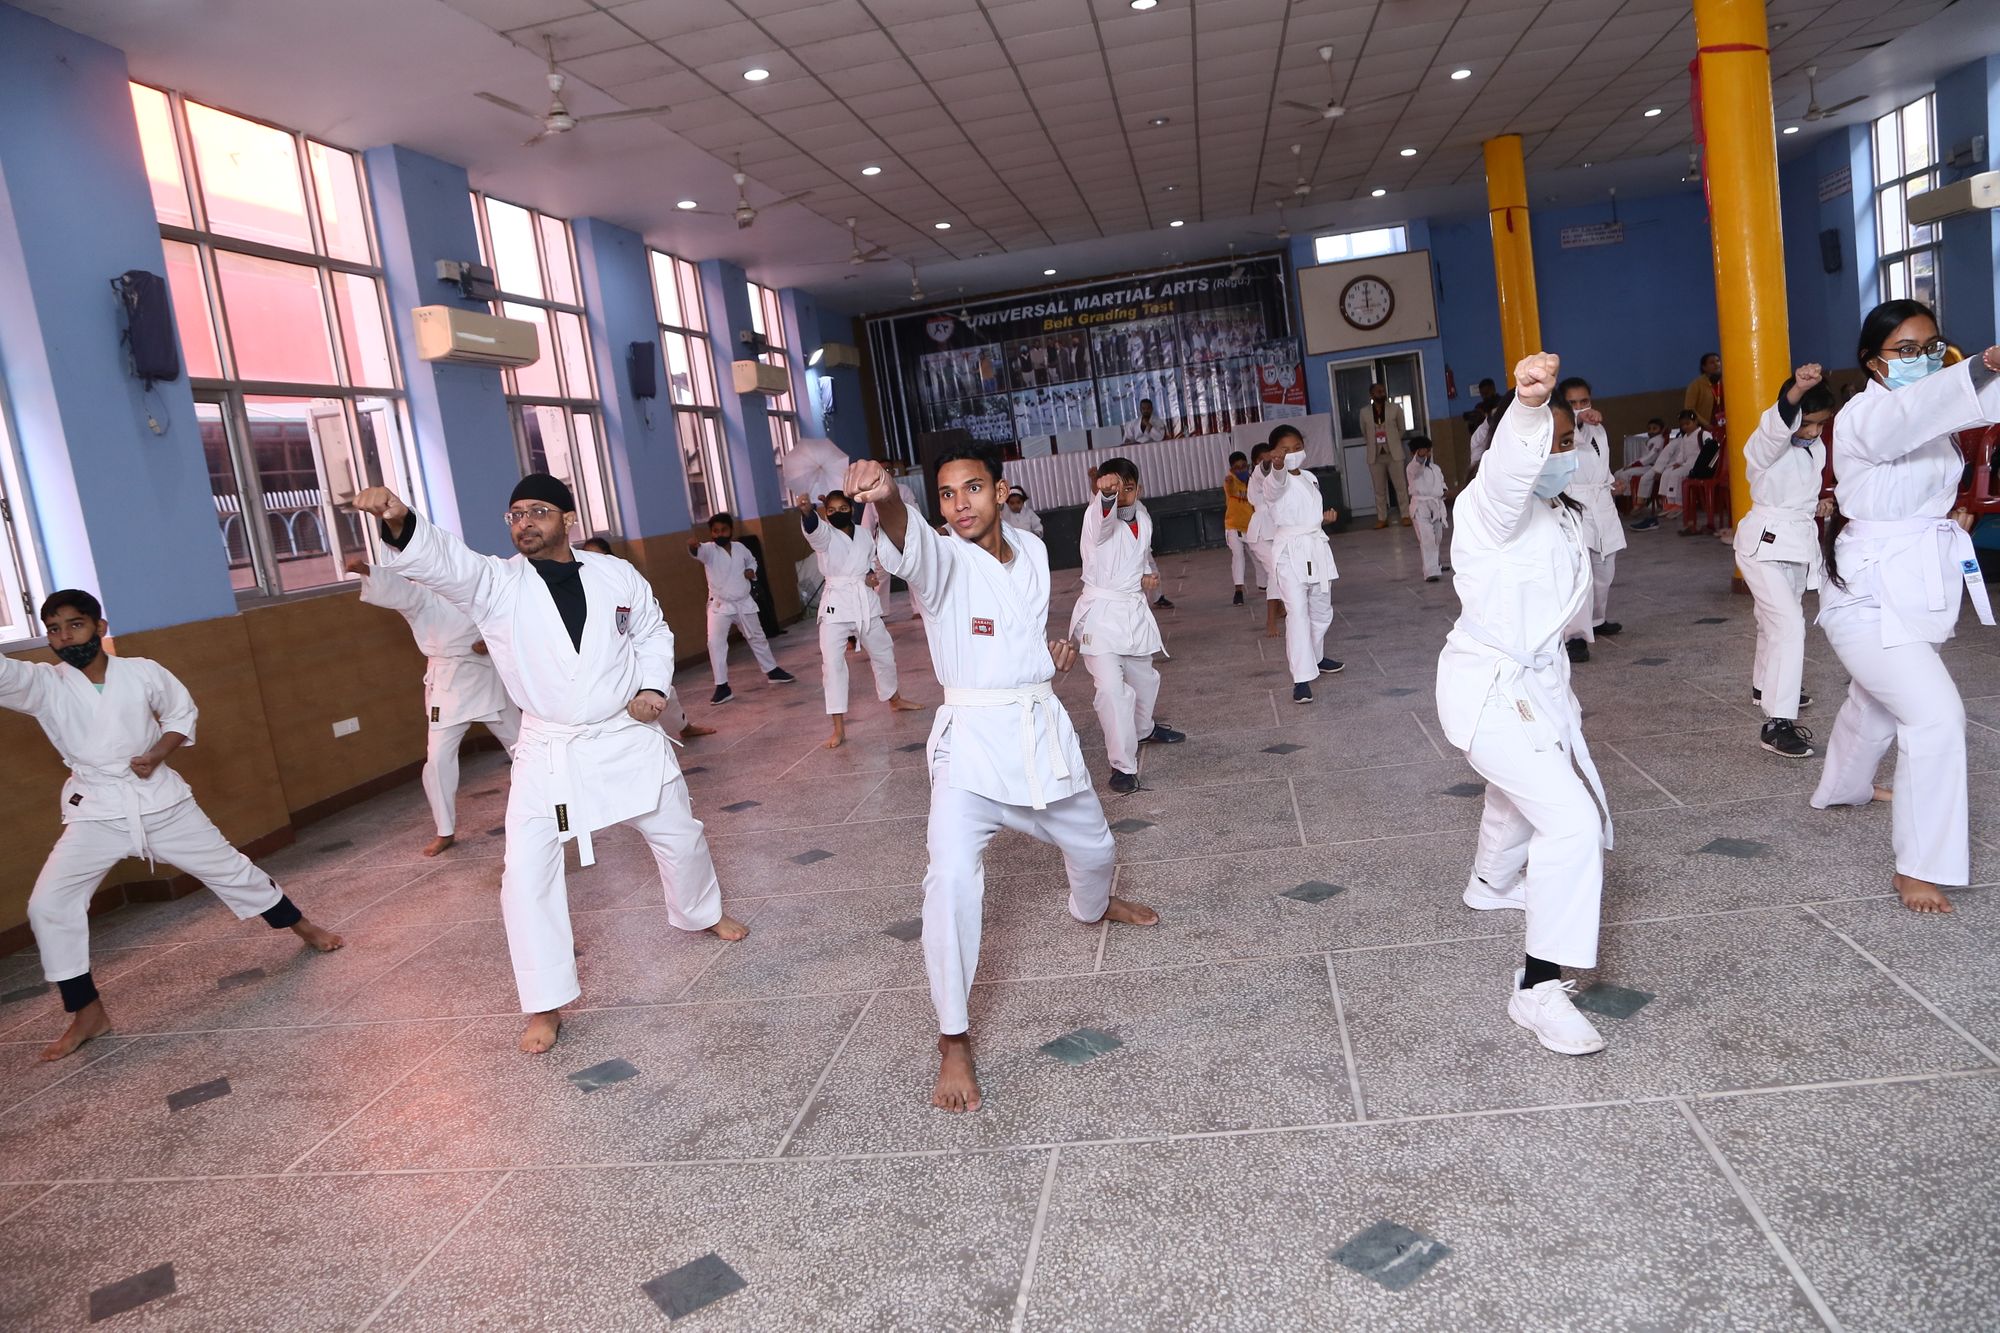 Shotokan Karate Belt Grading Test December 2021